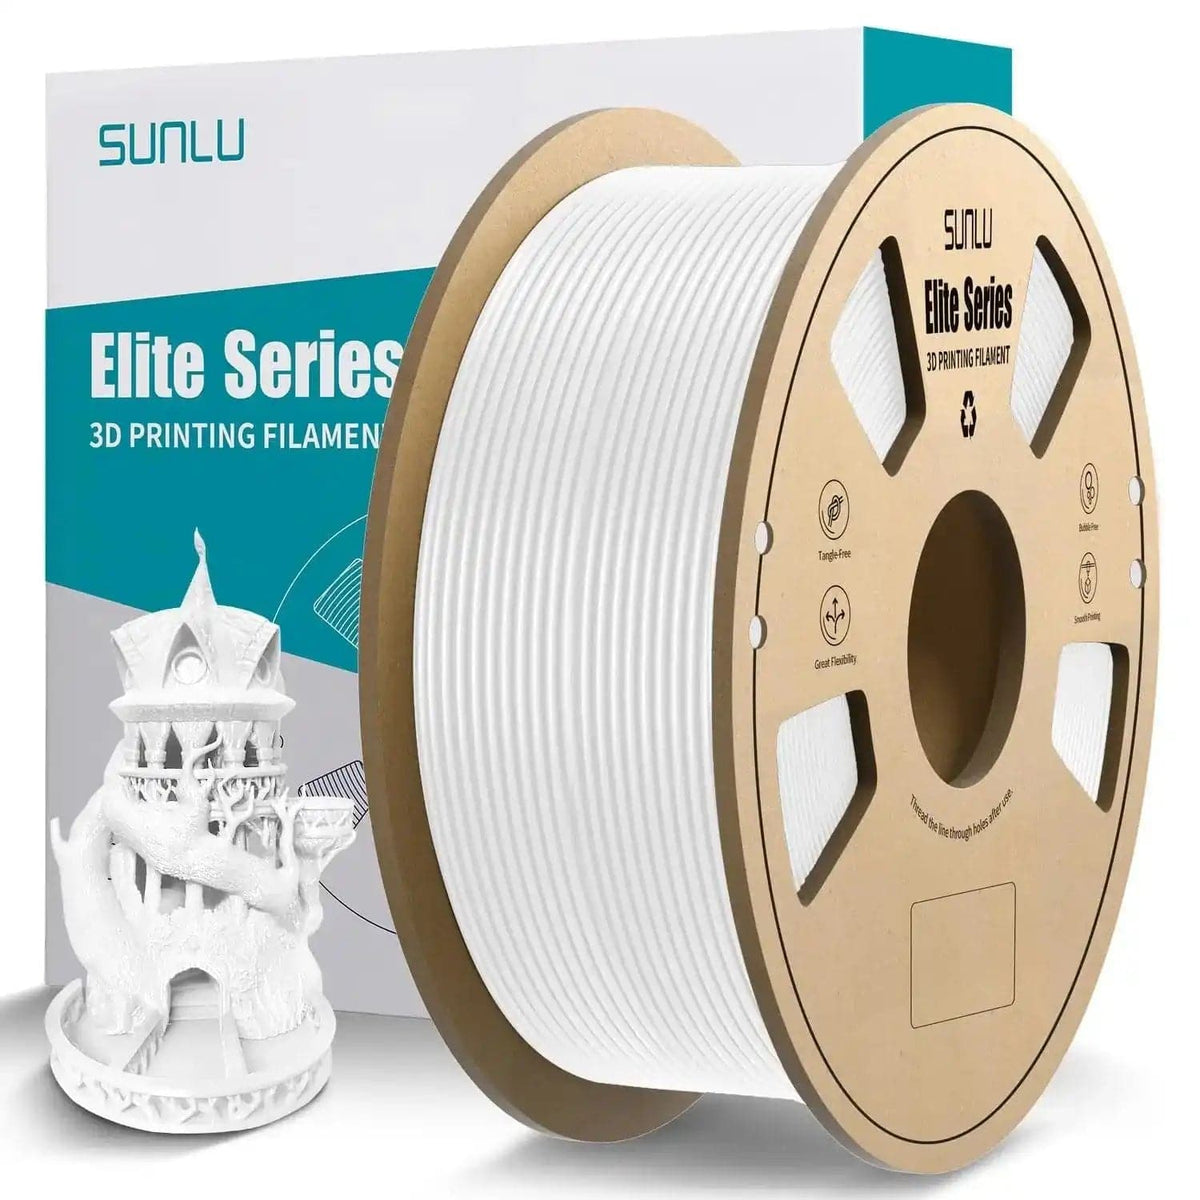 SunLu PLA Meta Filament 1.75mm, White, 1kg – DIY Electronics